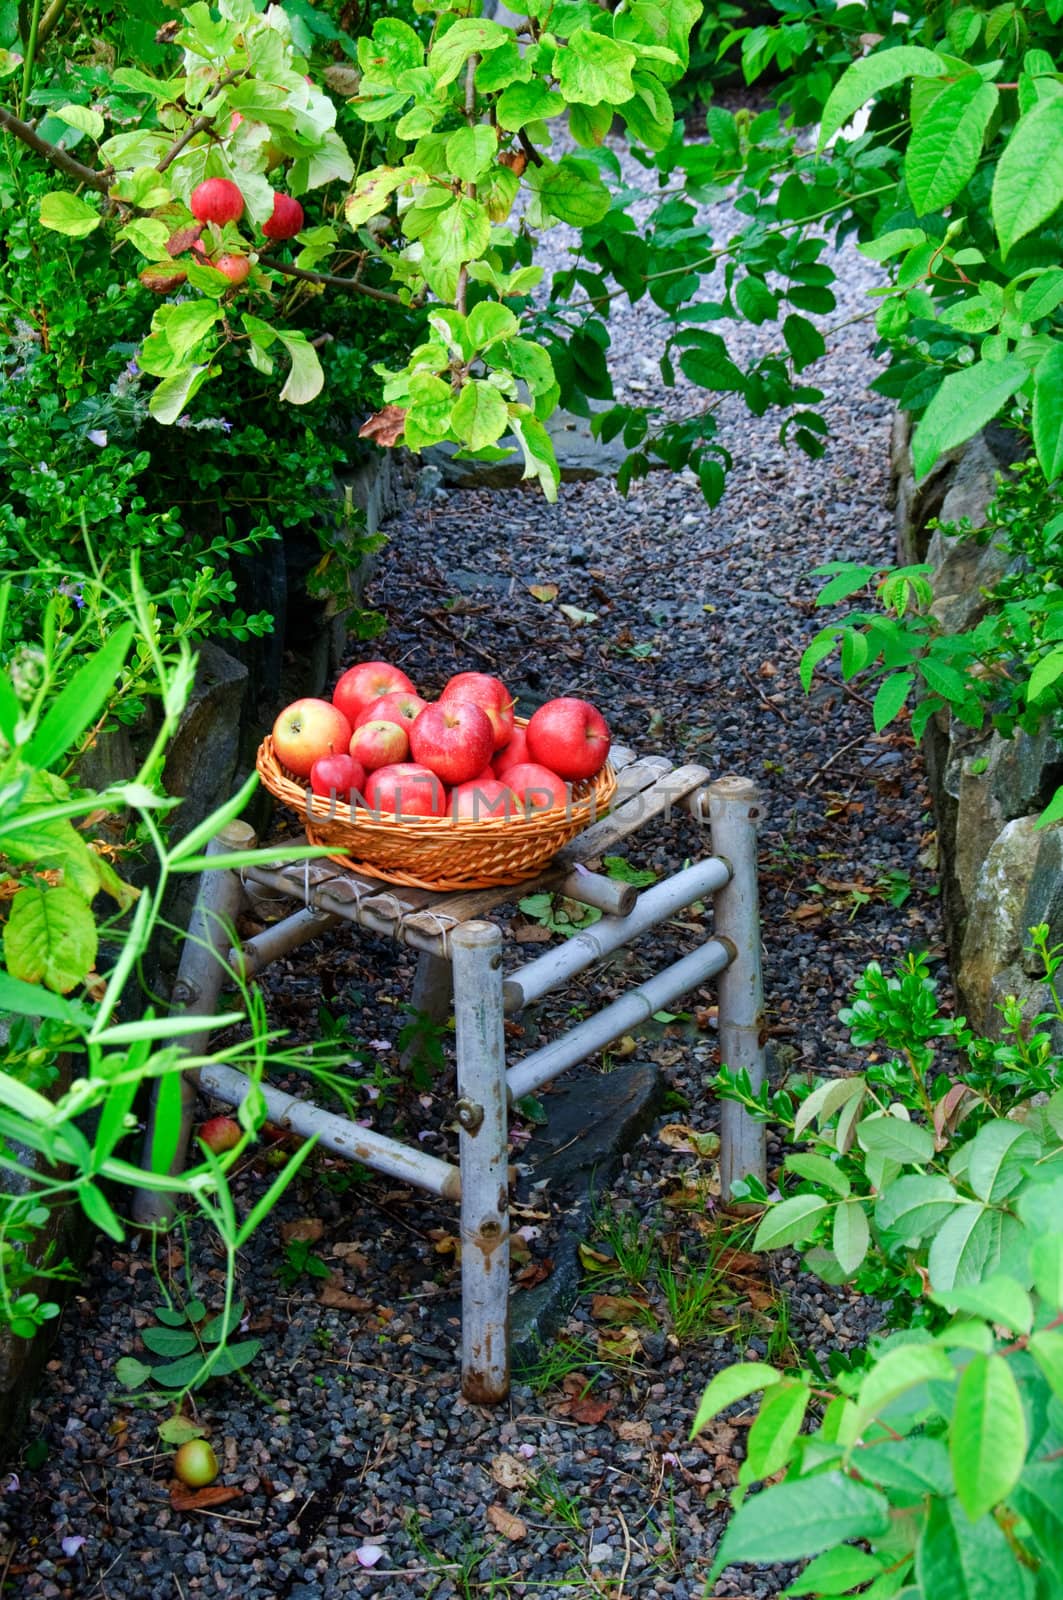 Apples in a garden by GryT